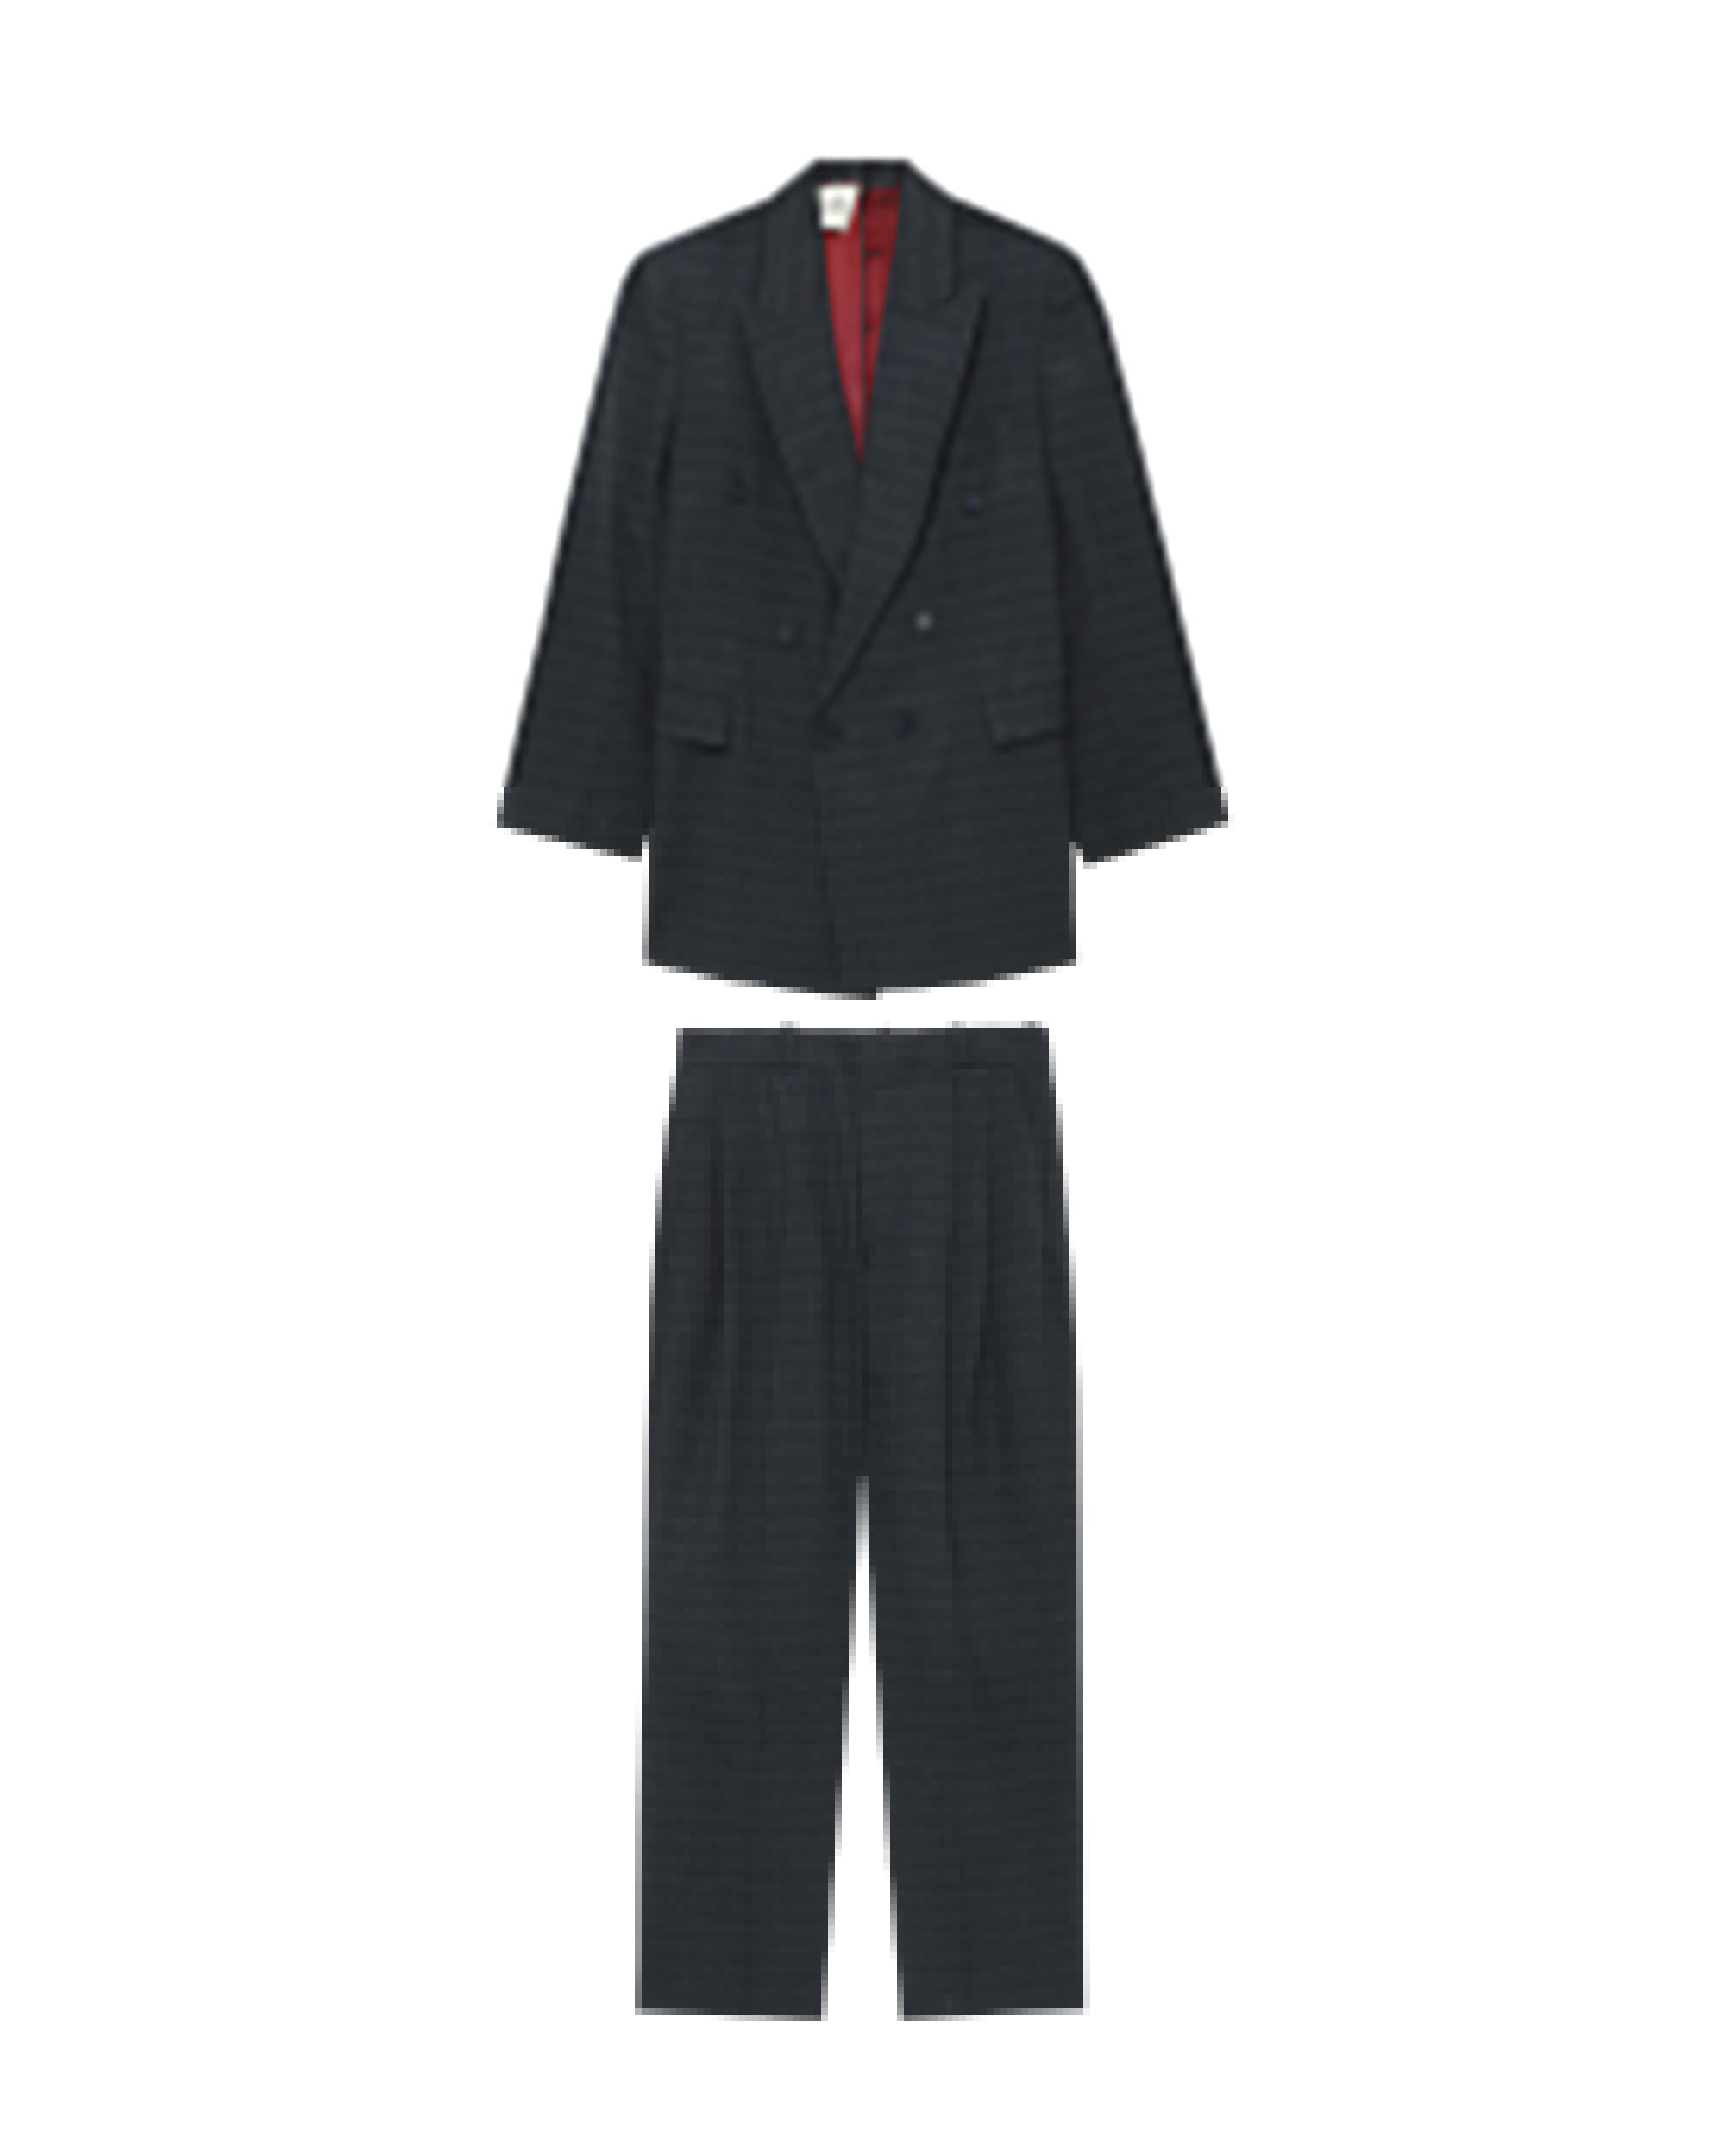 Classic suit set by HAVRE STUDIO